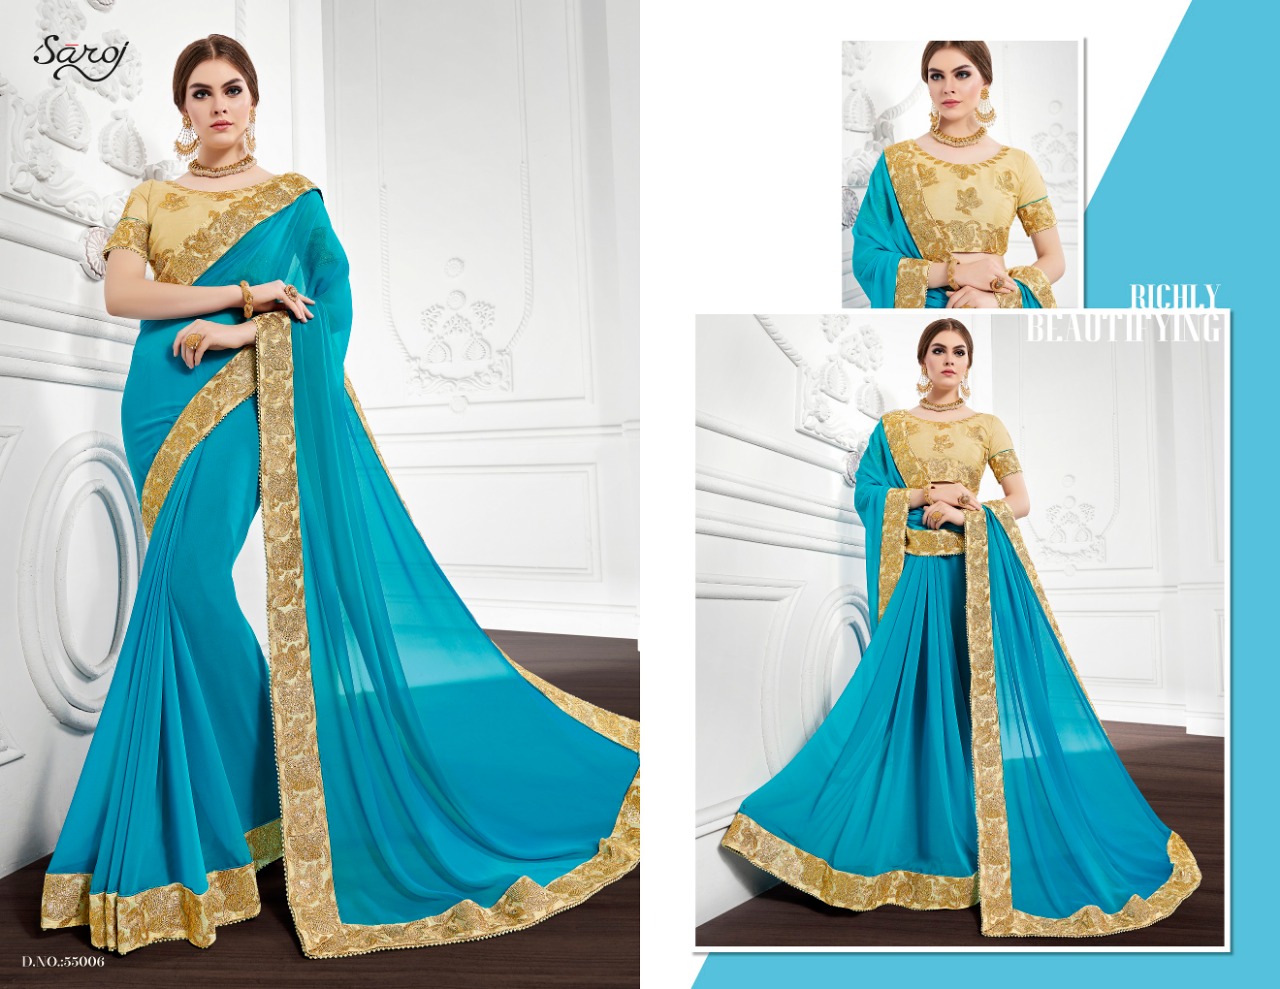 Saroj Saree Indian Fashion 55006